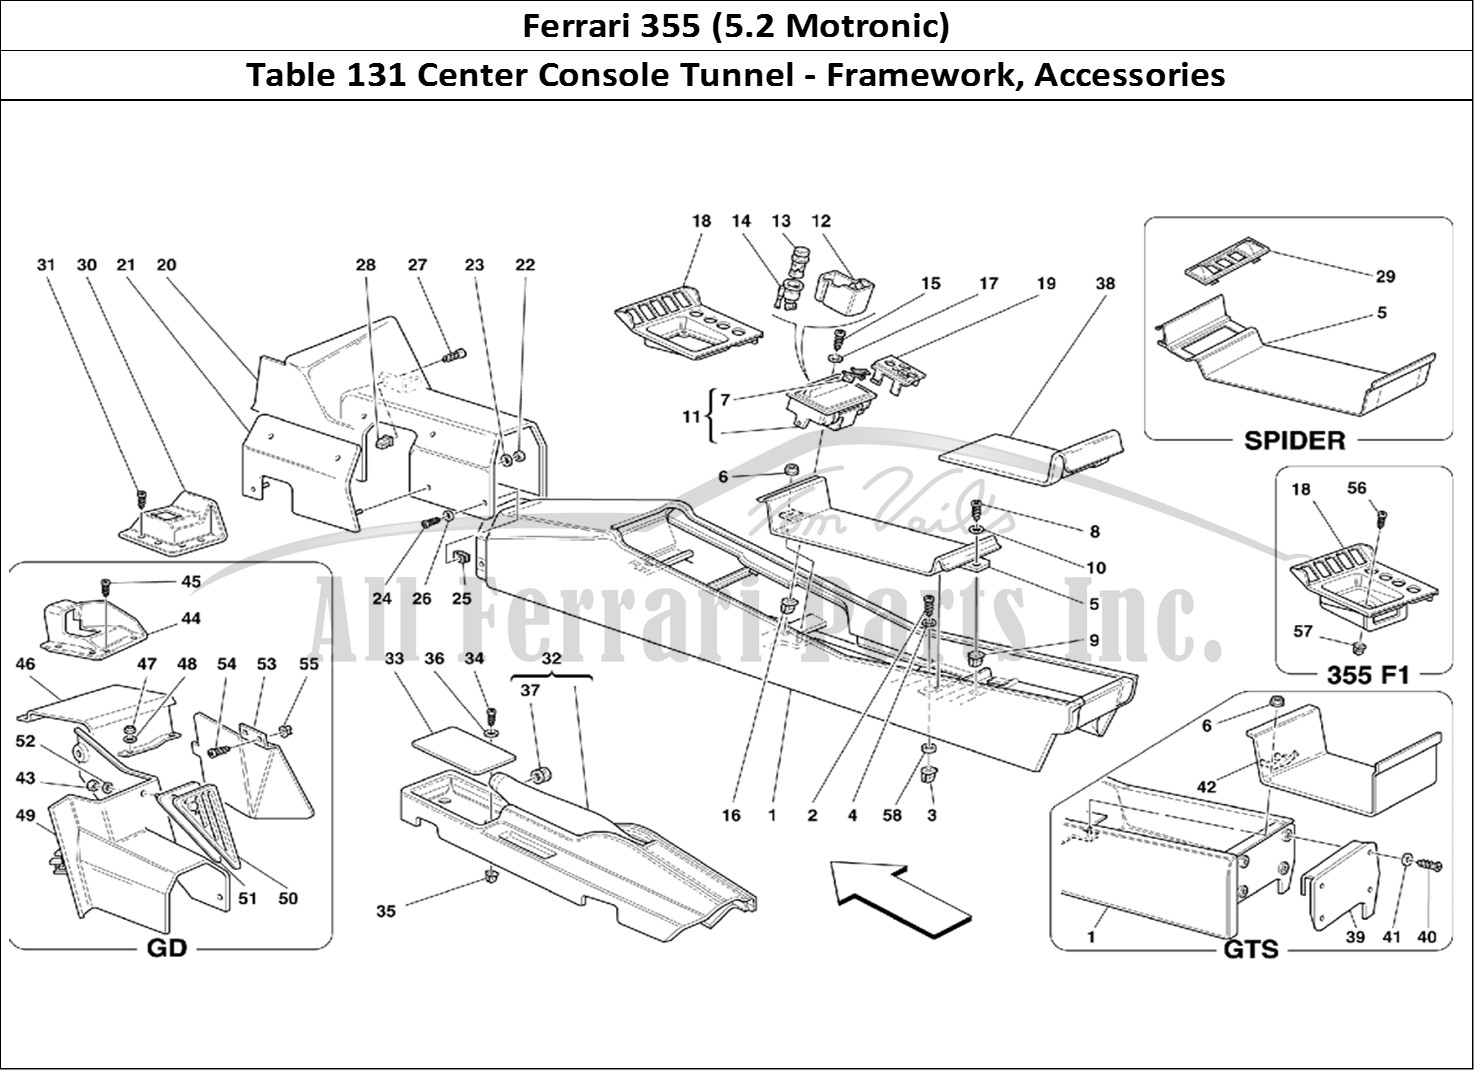 Ferrari Parts Ferrari 355 (5.2 Motronic) Page 131 Tunnel - Framework and Ac